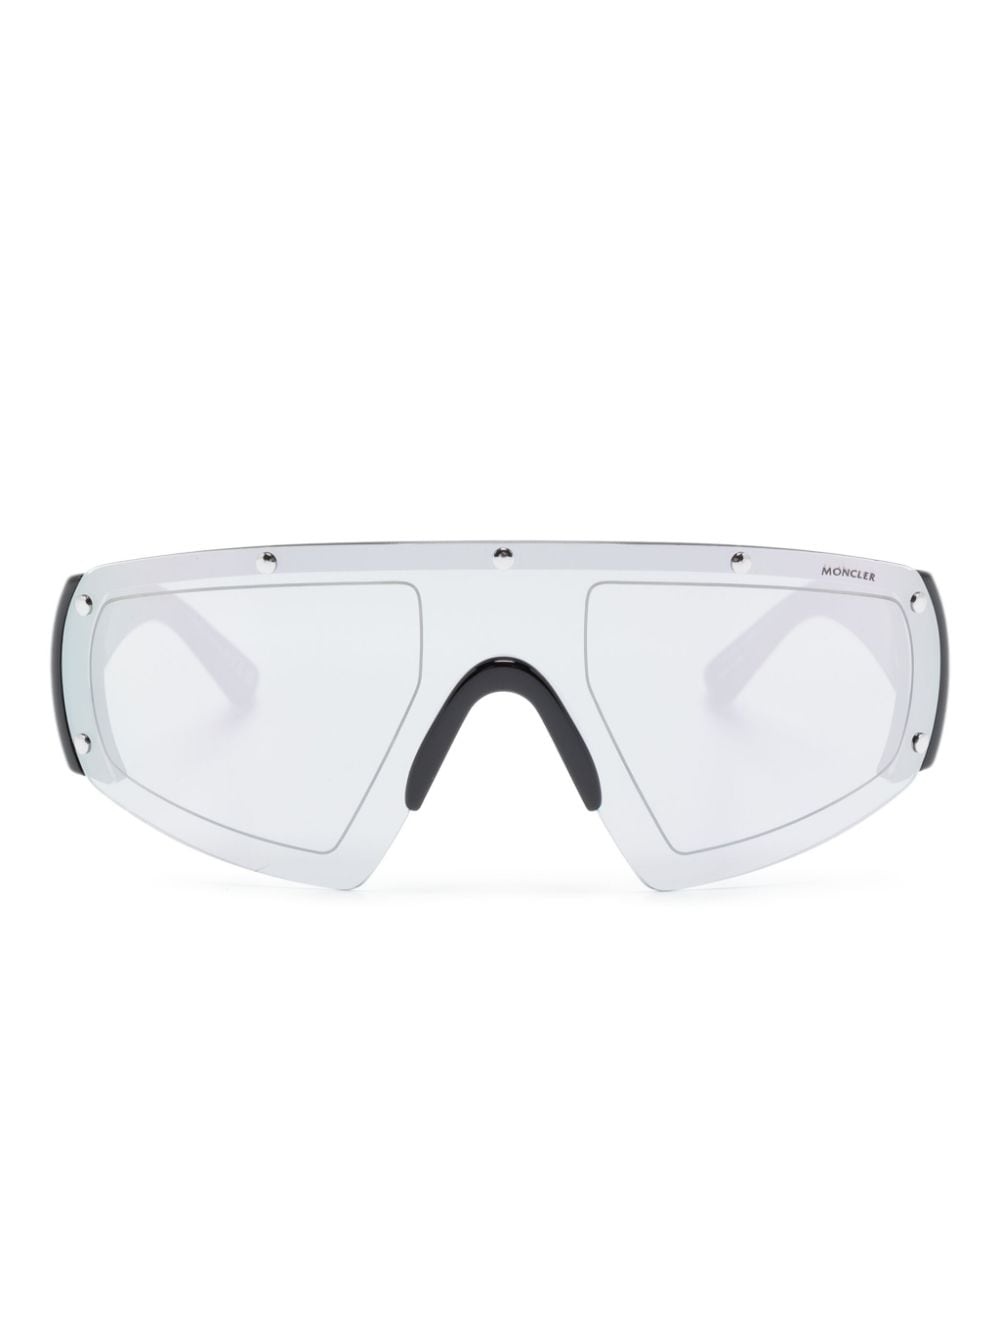 shield-frame mirrored sunglasses - 1